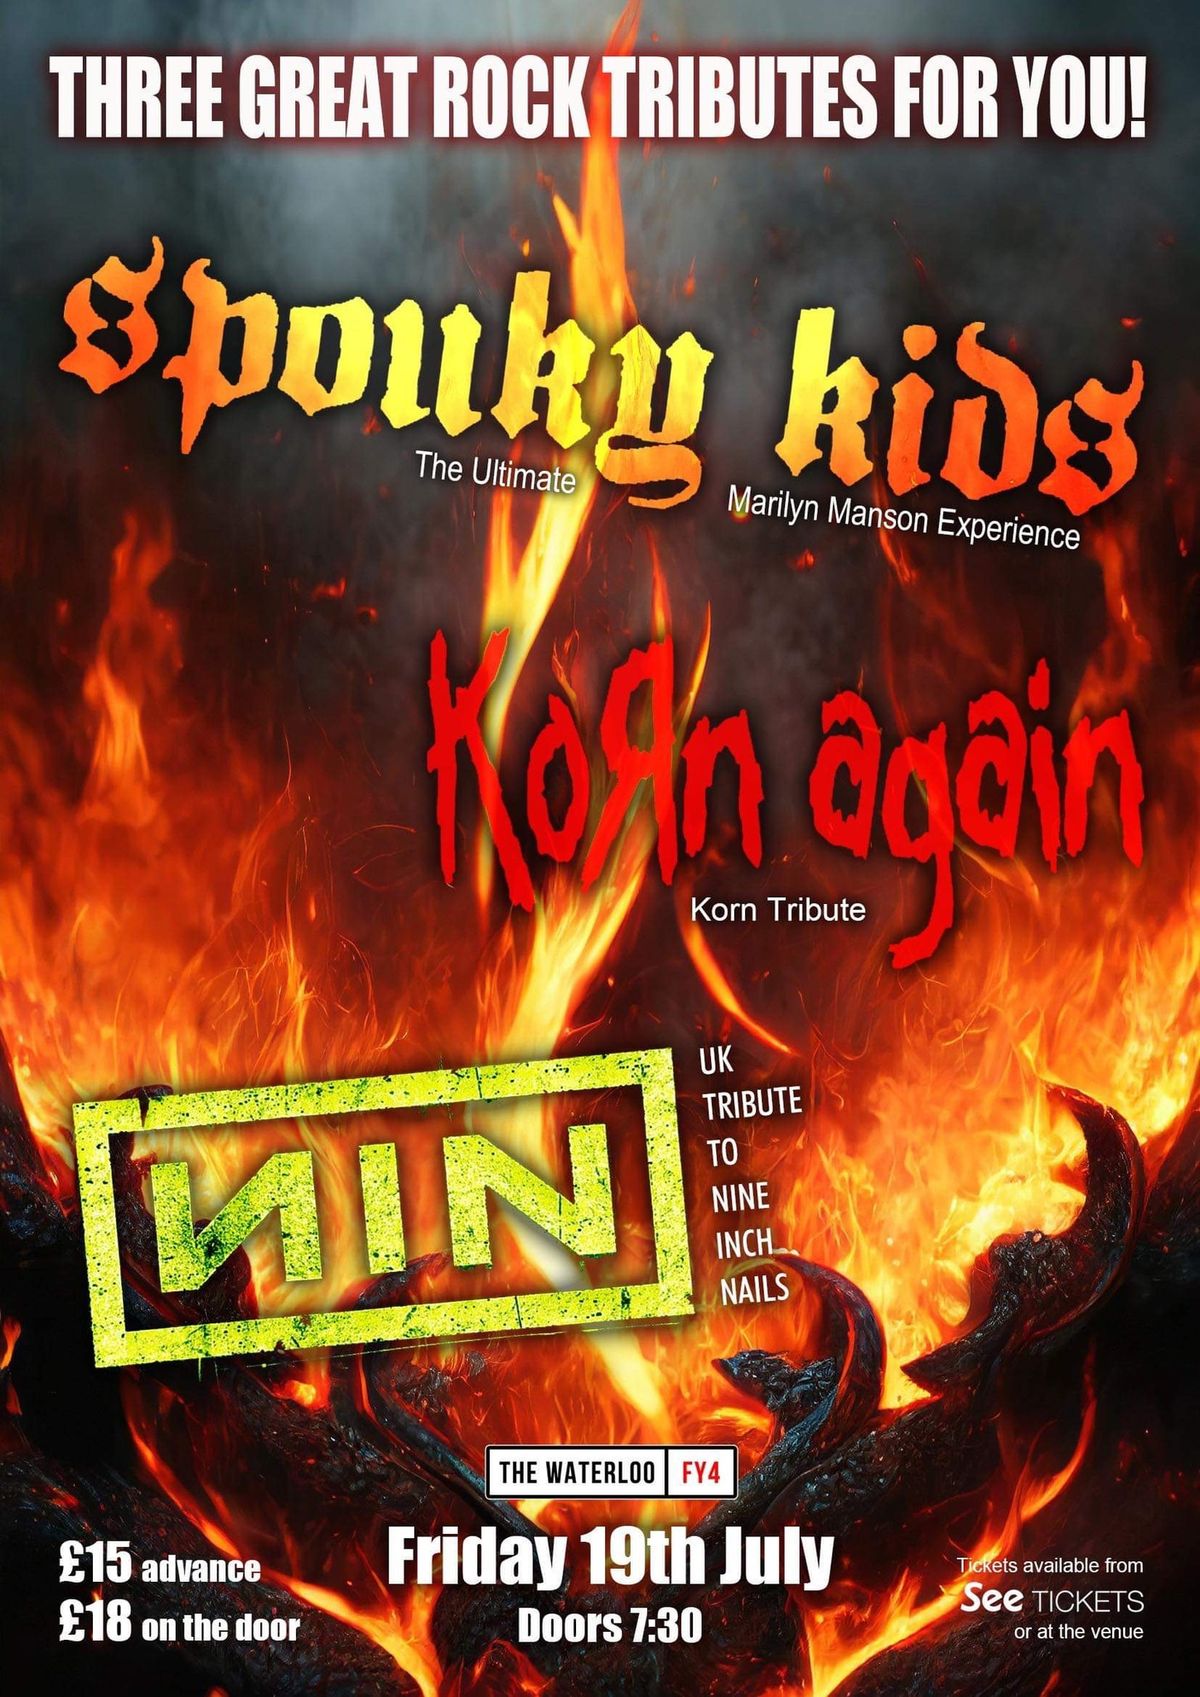 Spouky Kids, Korn Again, Nine Inch Nails Tribute 